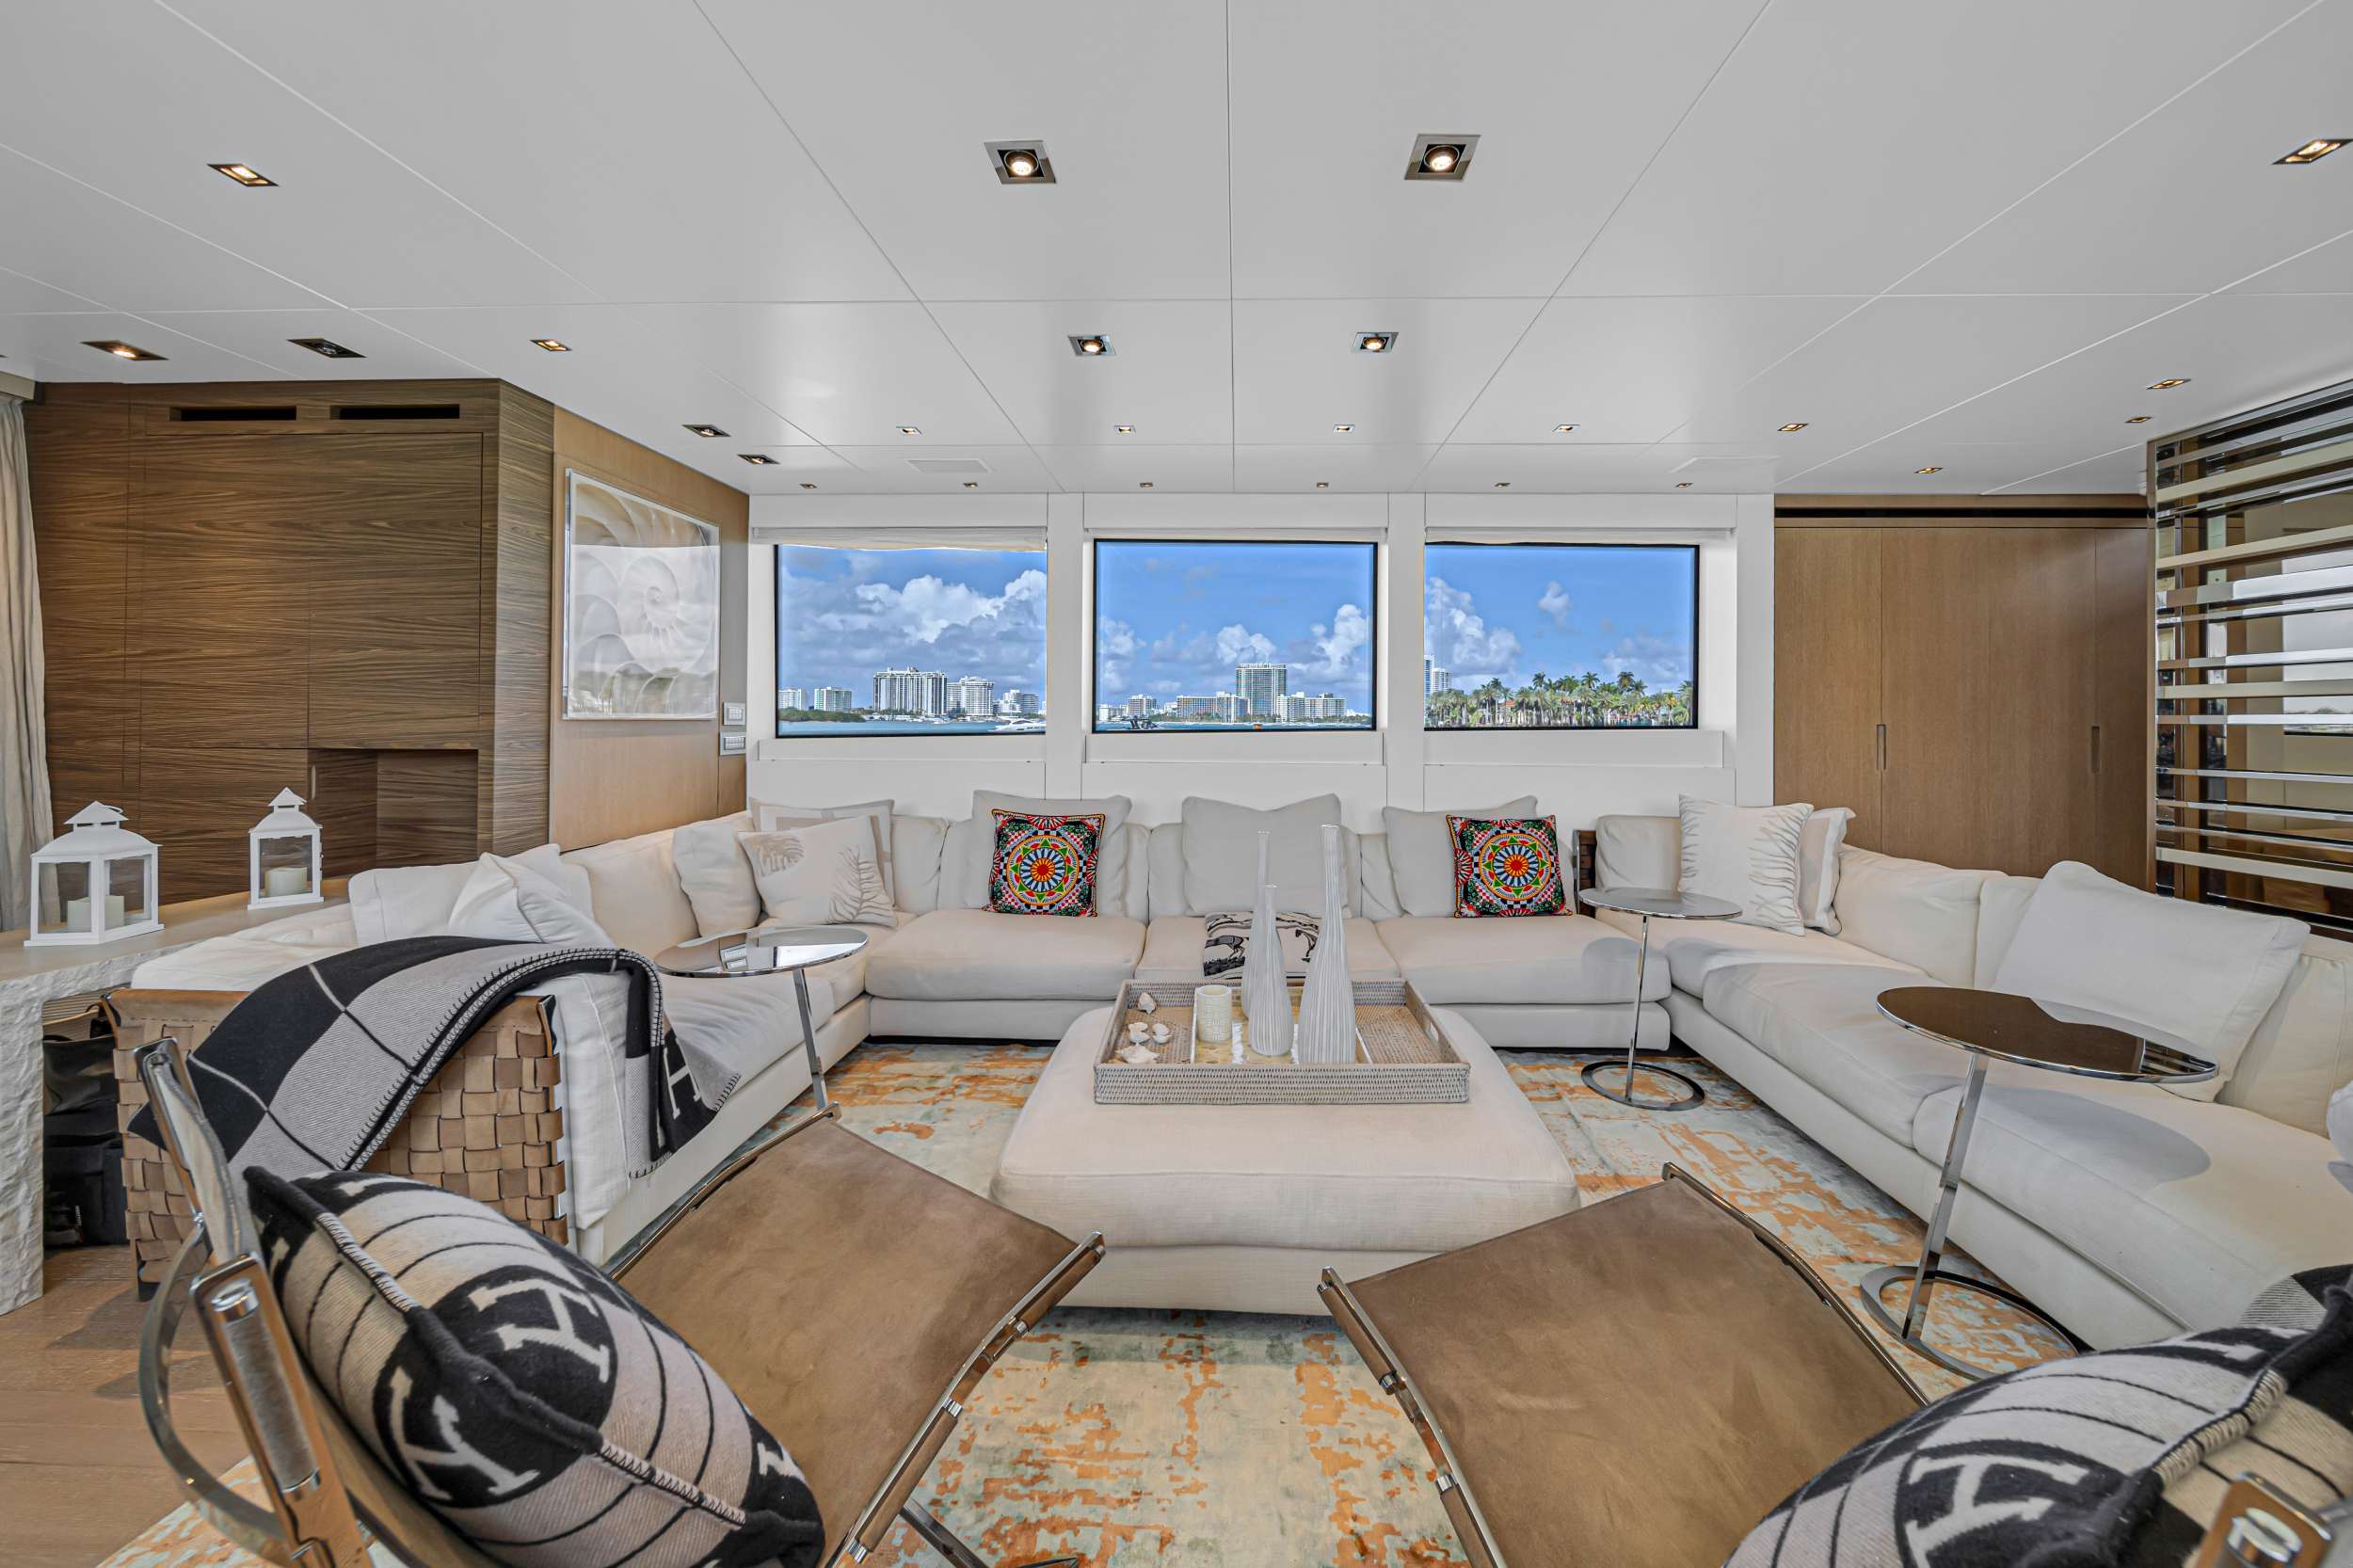 Astonish - Luxury yacht charter Bahamas & Boat hire in Florida & Bahamas 2